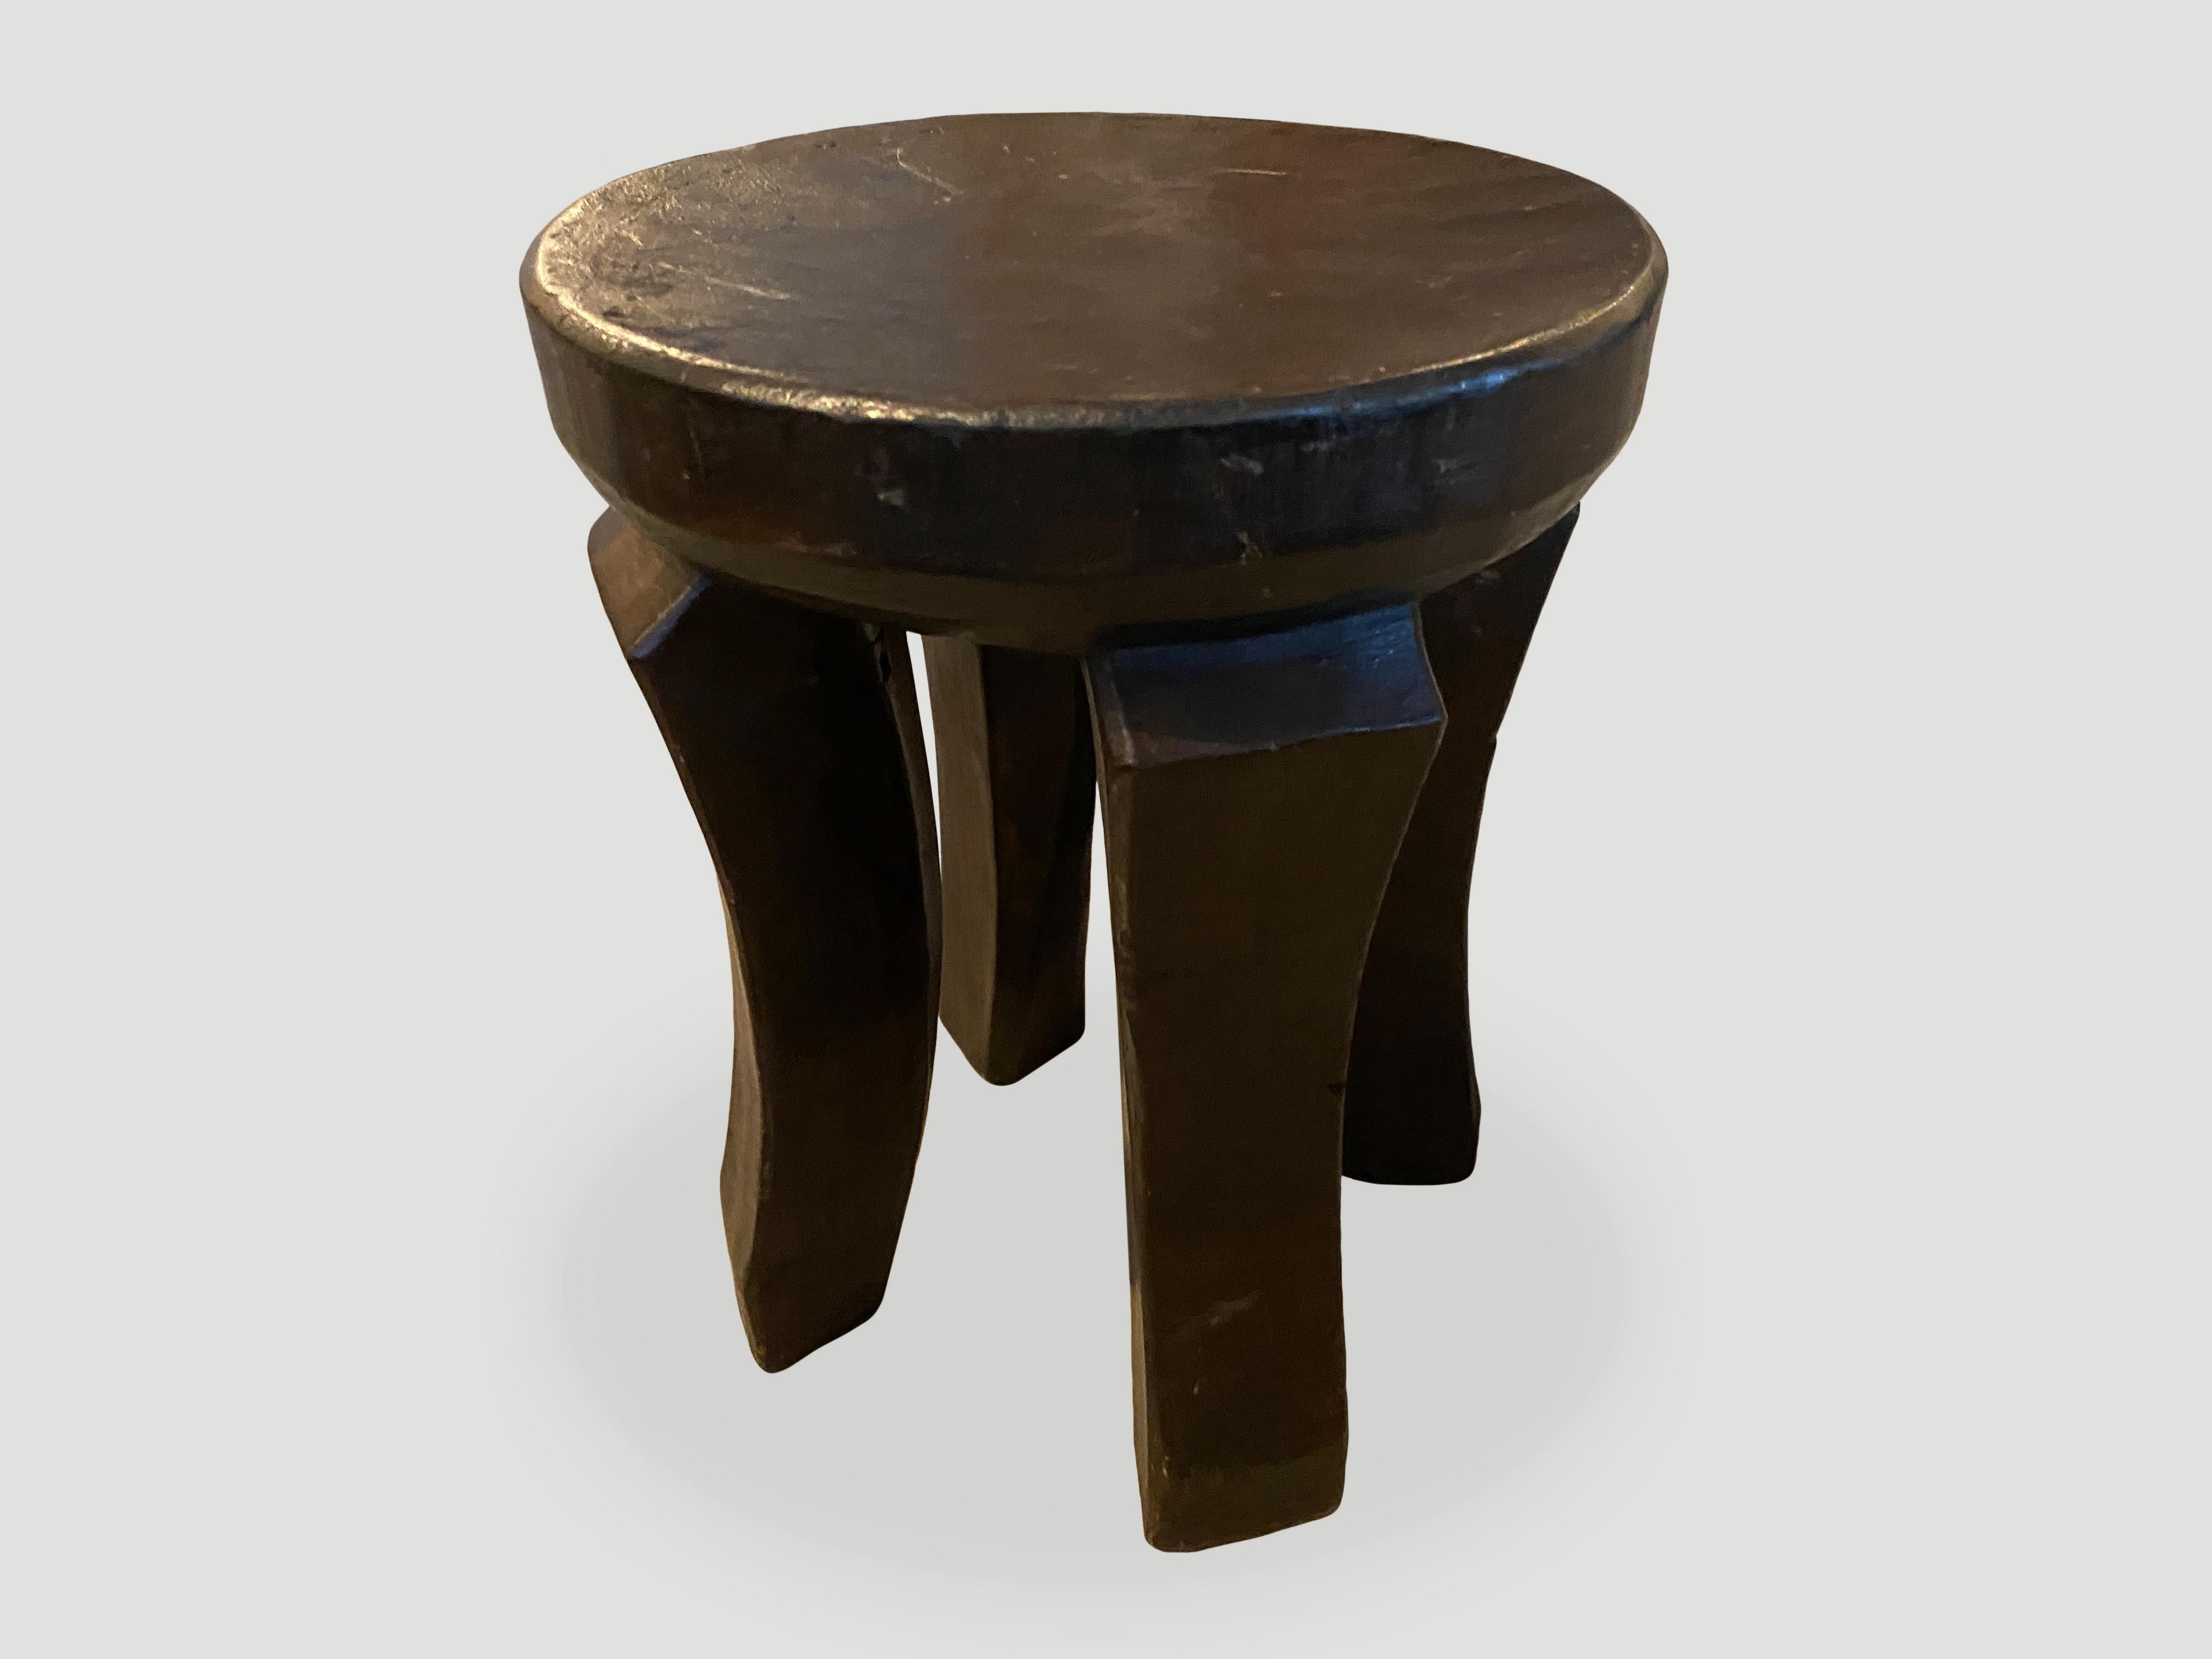 Tribal Andrianna Shamaris African Mahogany Wood Side Table or Stool